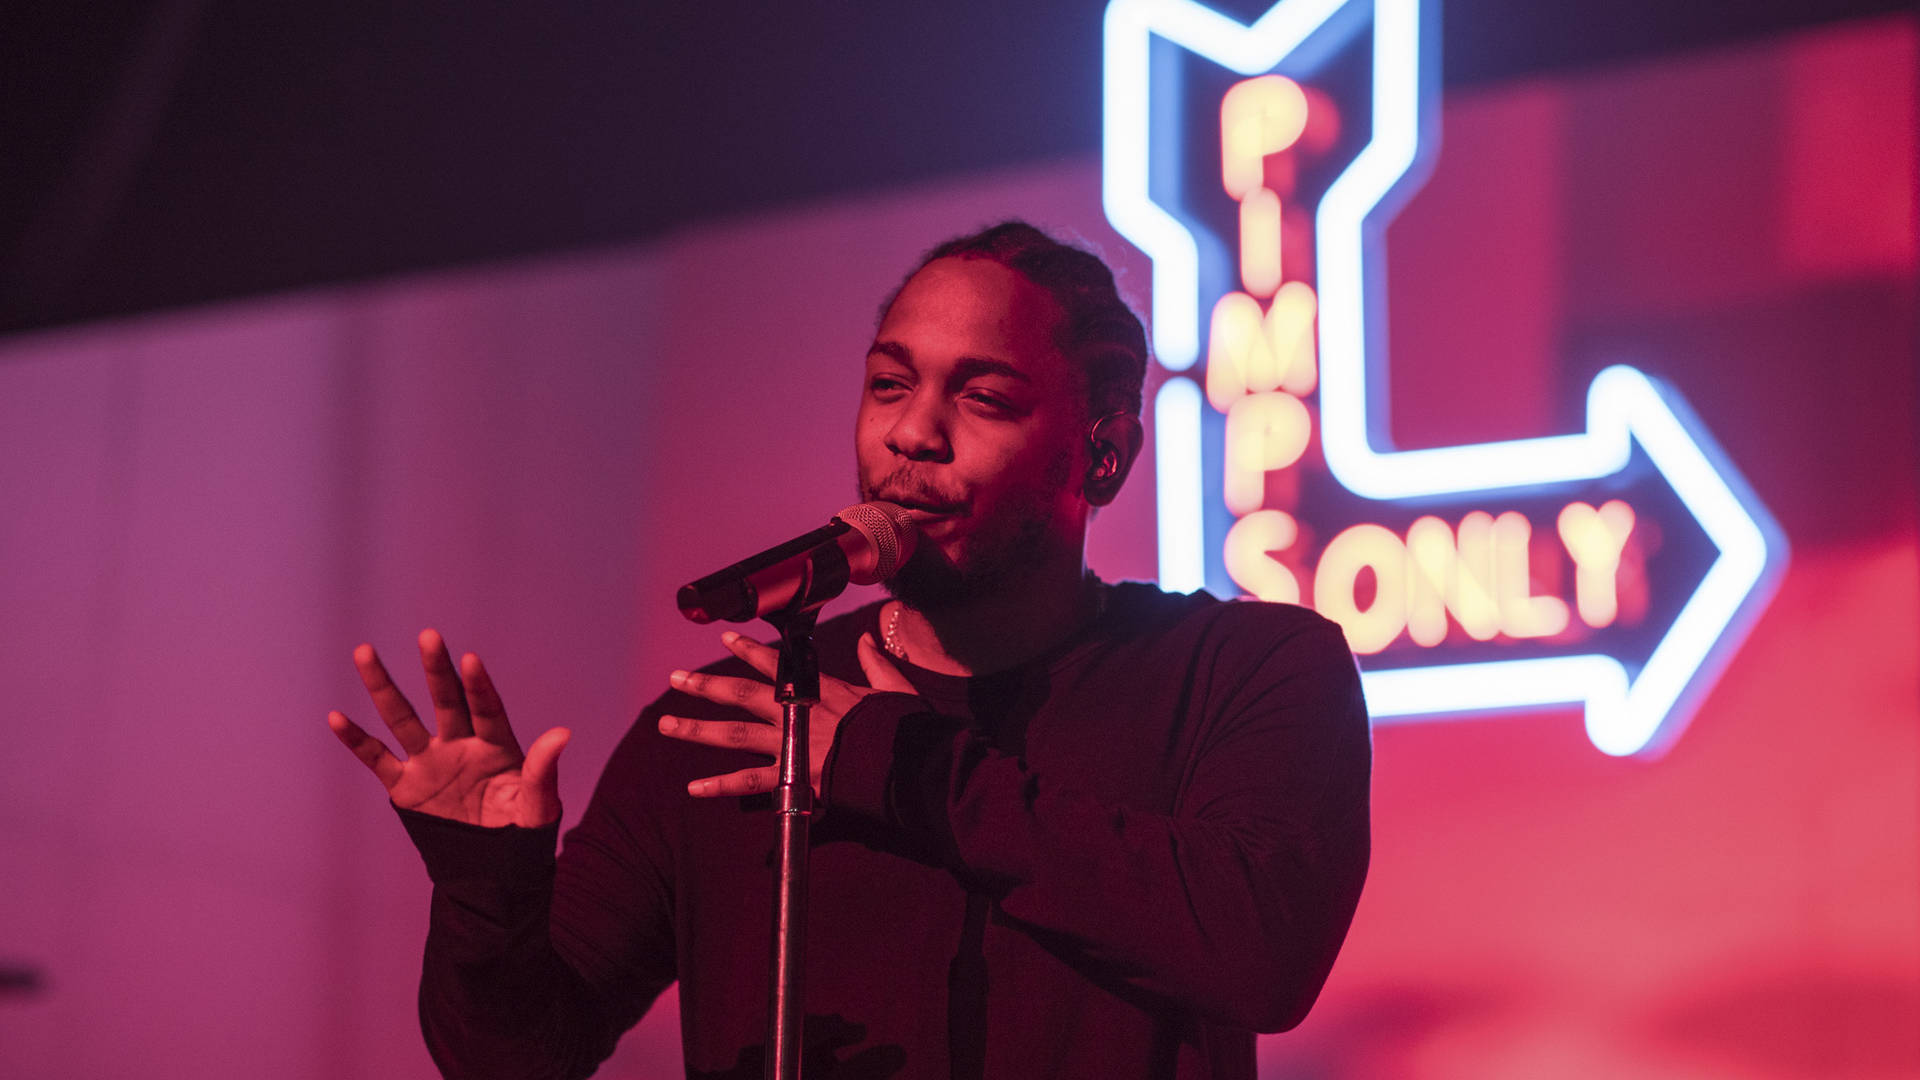 Kendrick Lamar In Pink Aesthetic Background